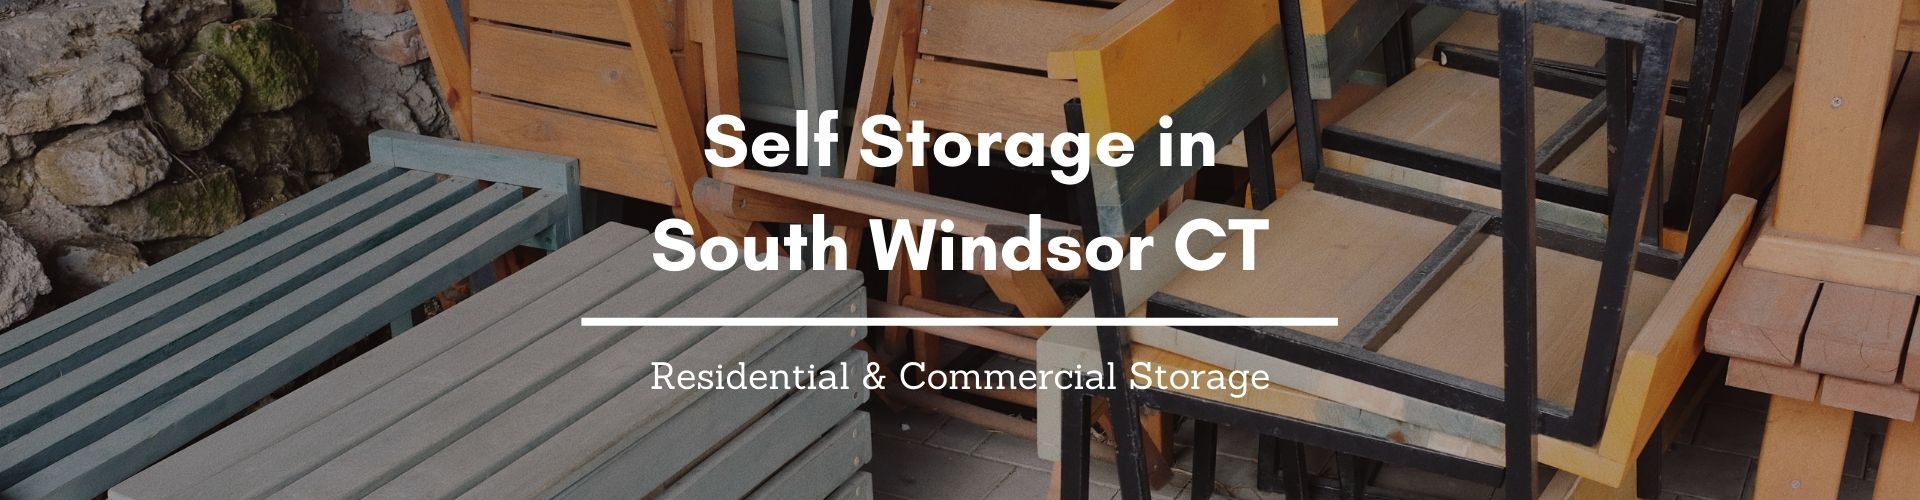 Self Storage South Windsor CT